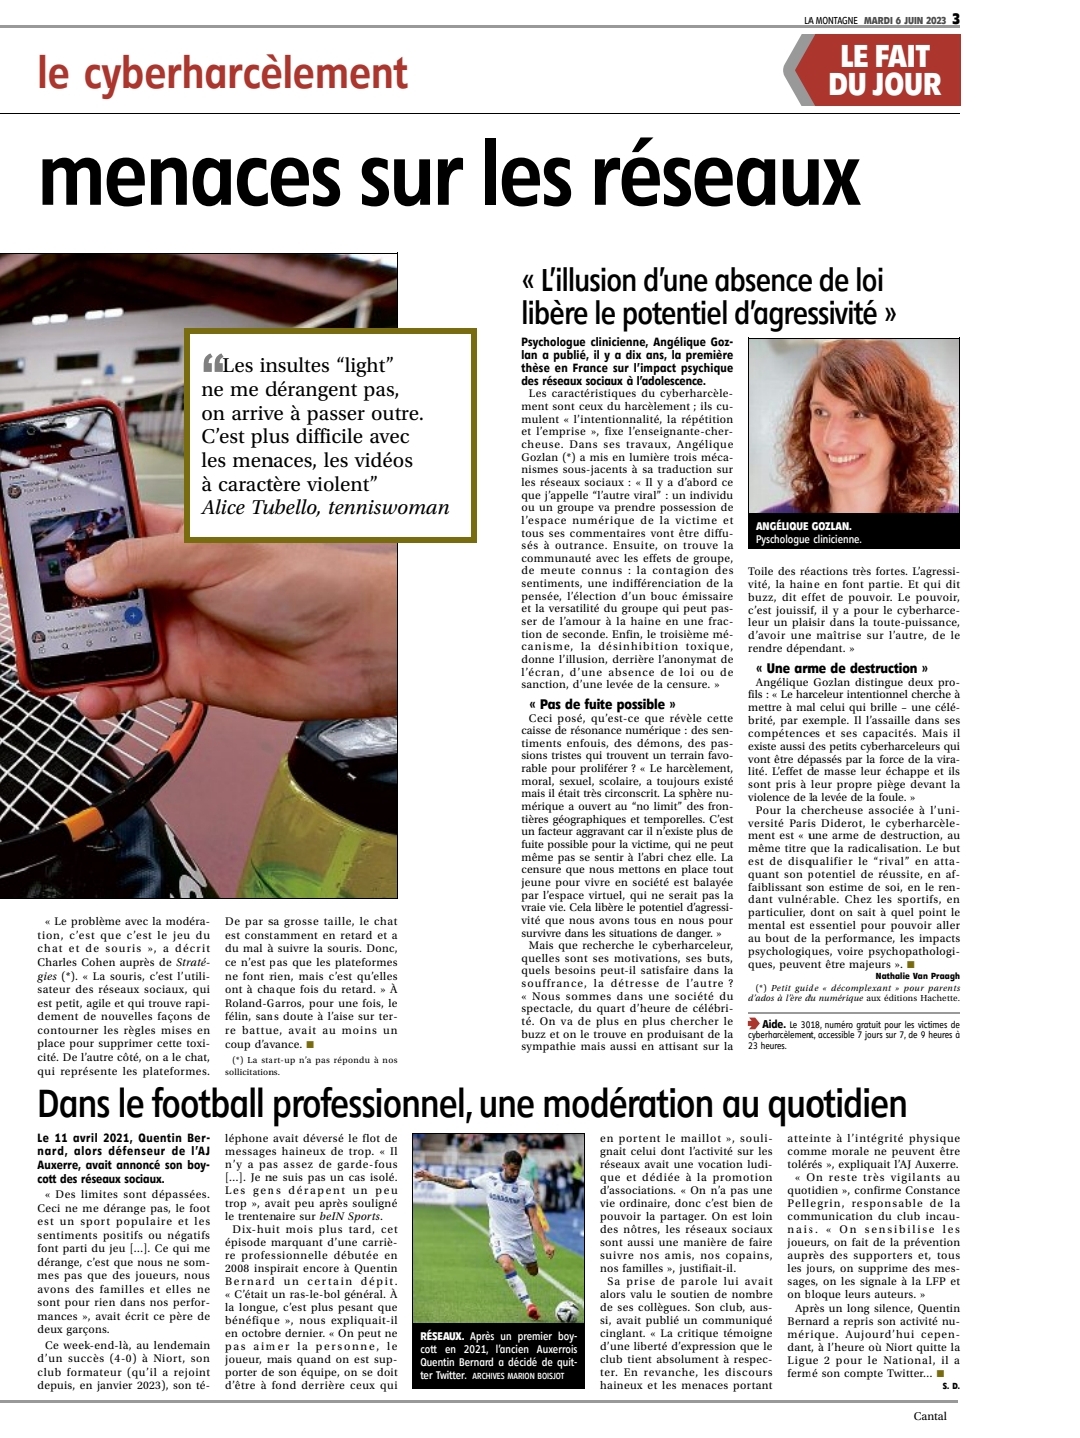 SmartSelect_20230606_121101_Centre France - Le Journal.jpg